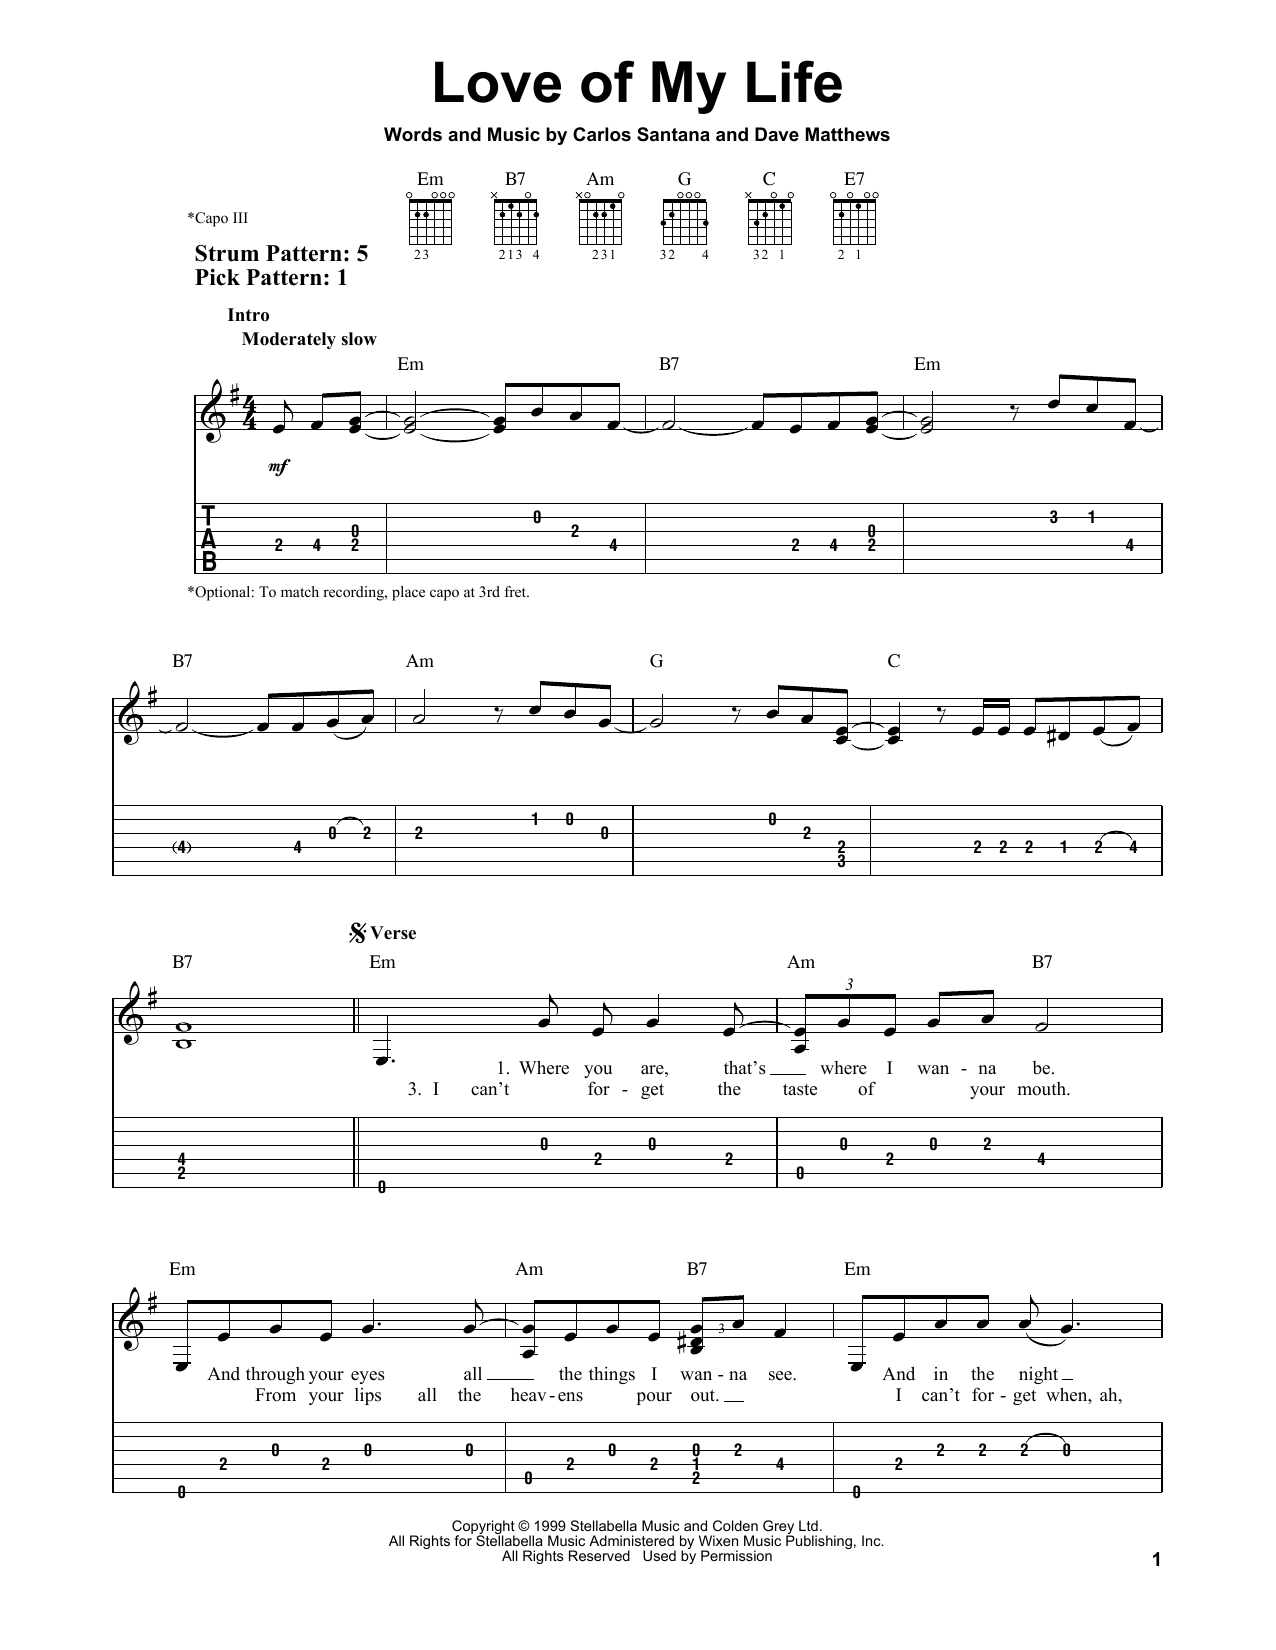 Santana Love Of My Life (feat. Dave Matthews) Sheet Music Notes & Chords for Guitar Tab - Download or Print PDF